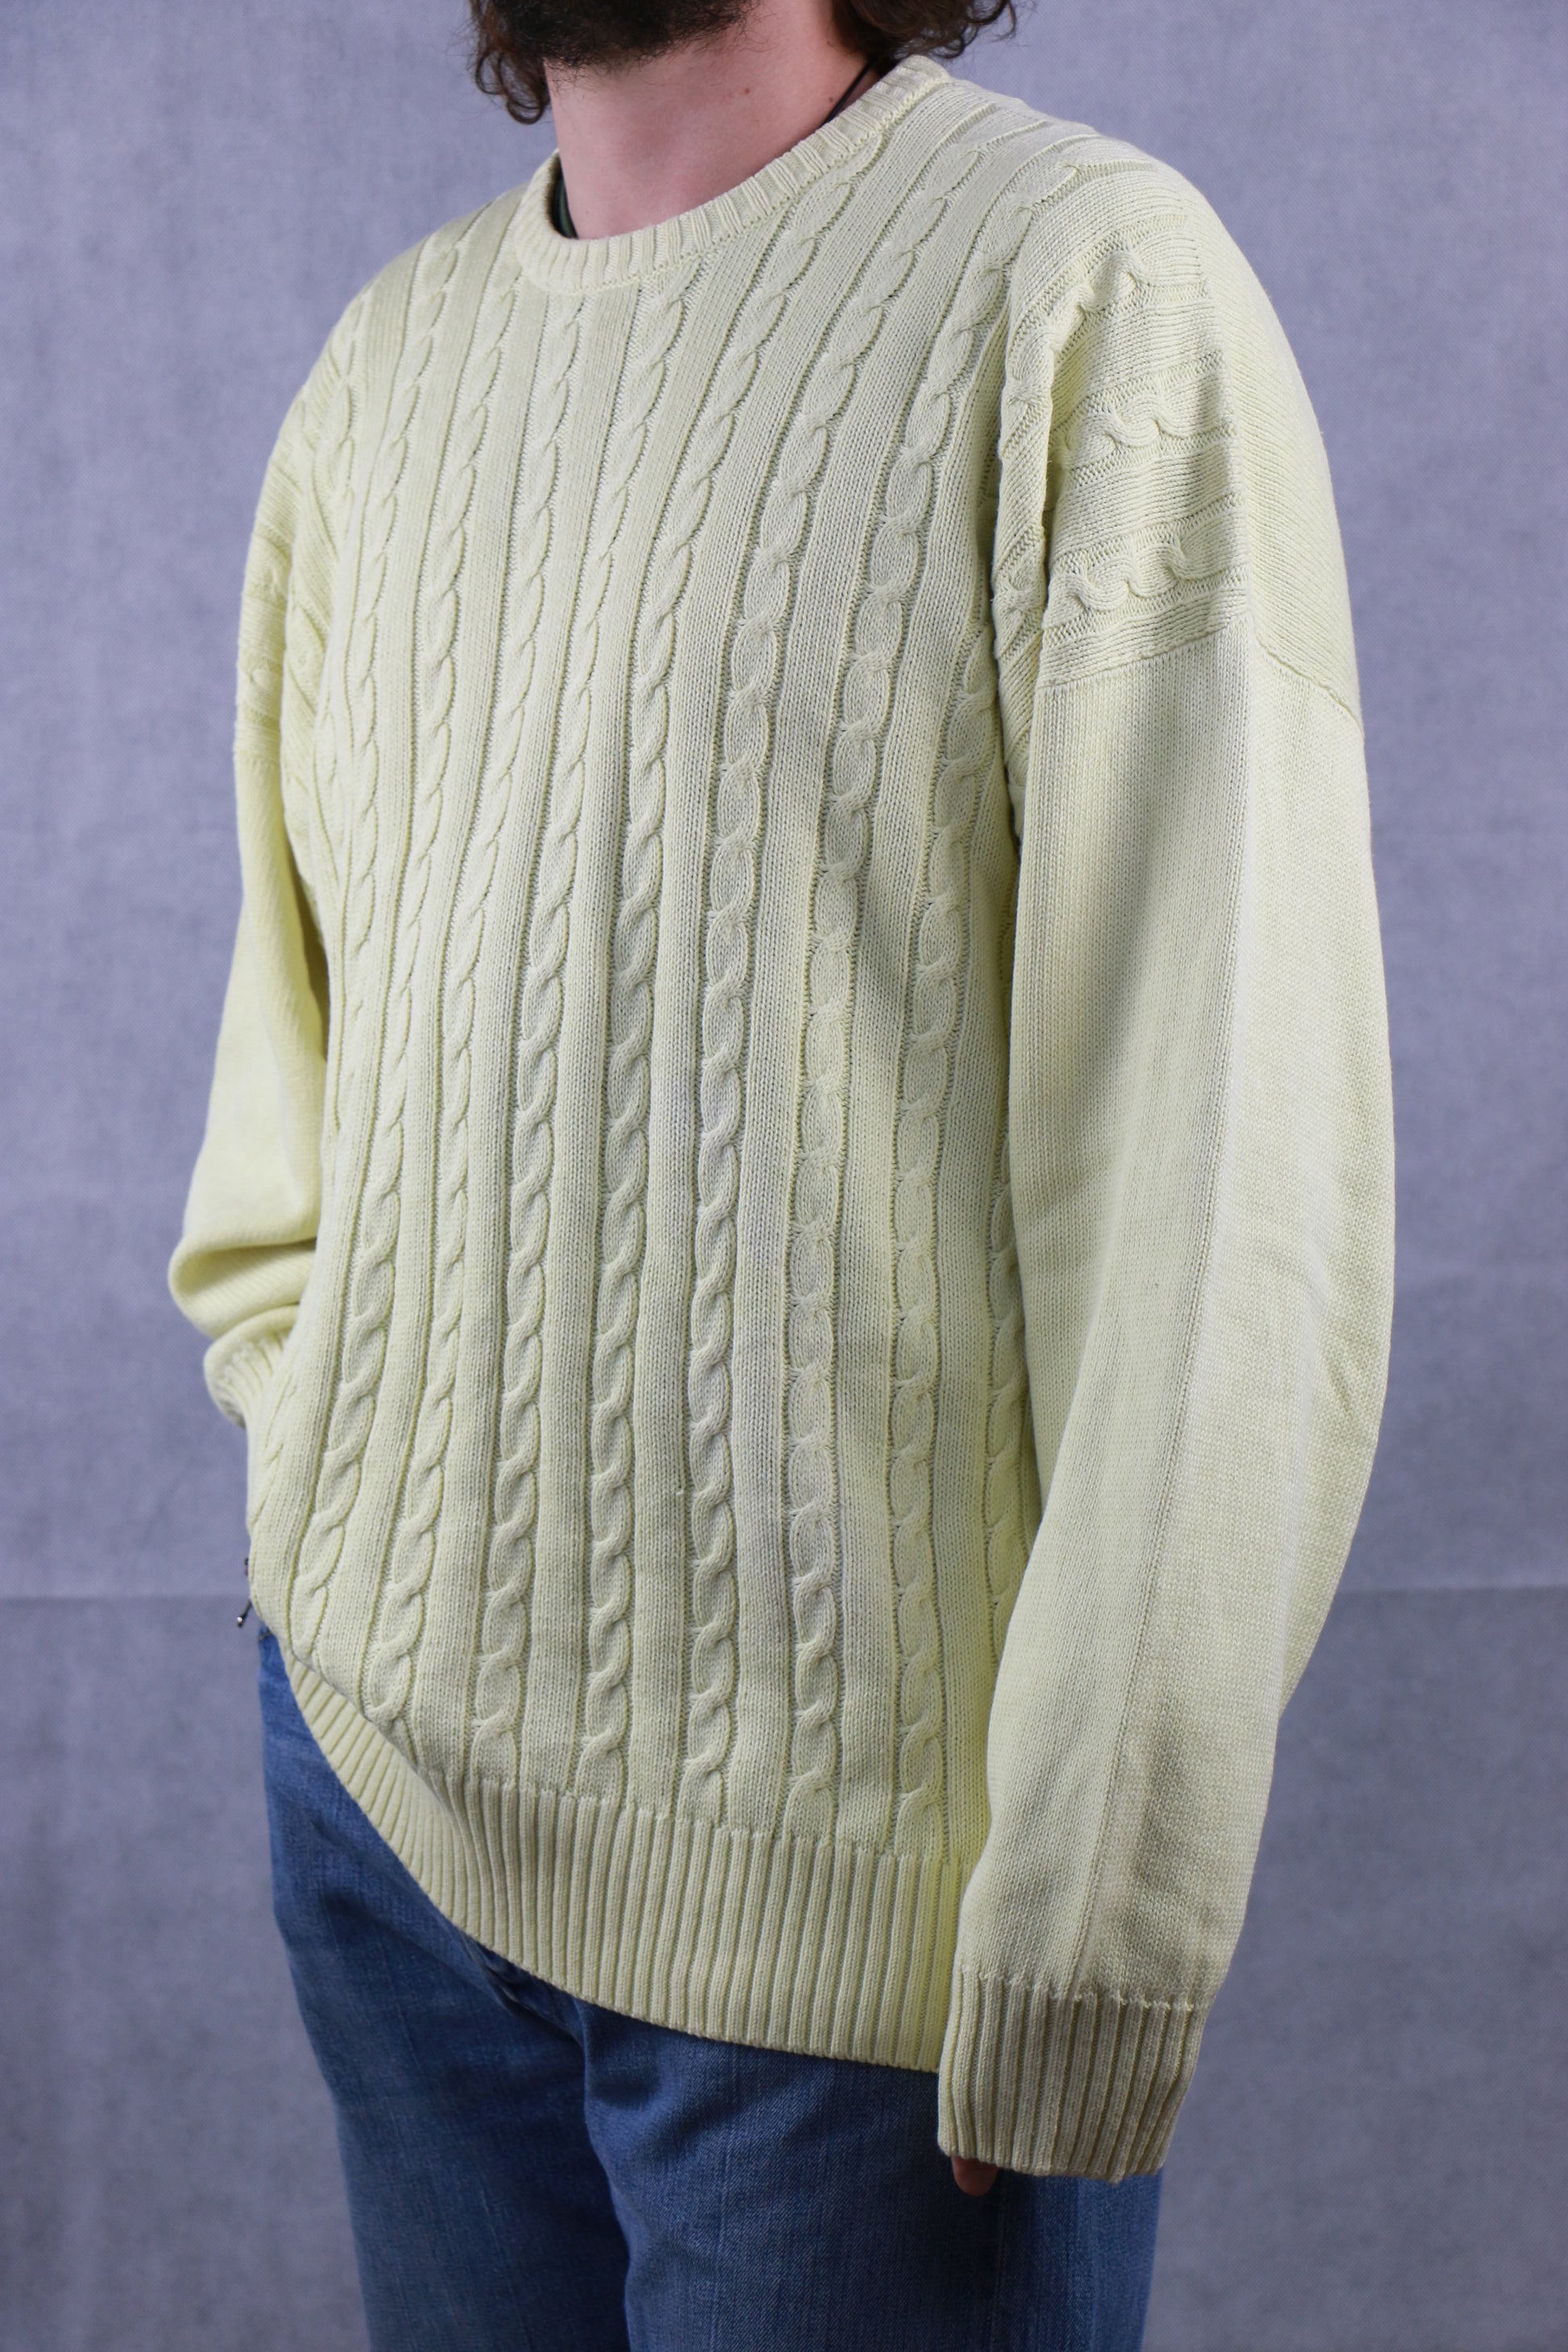 Burberrys' Lemon Sweater, clochard92.com